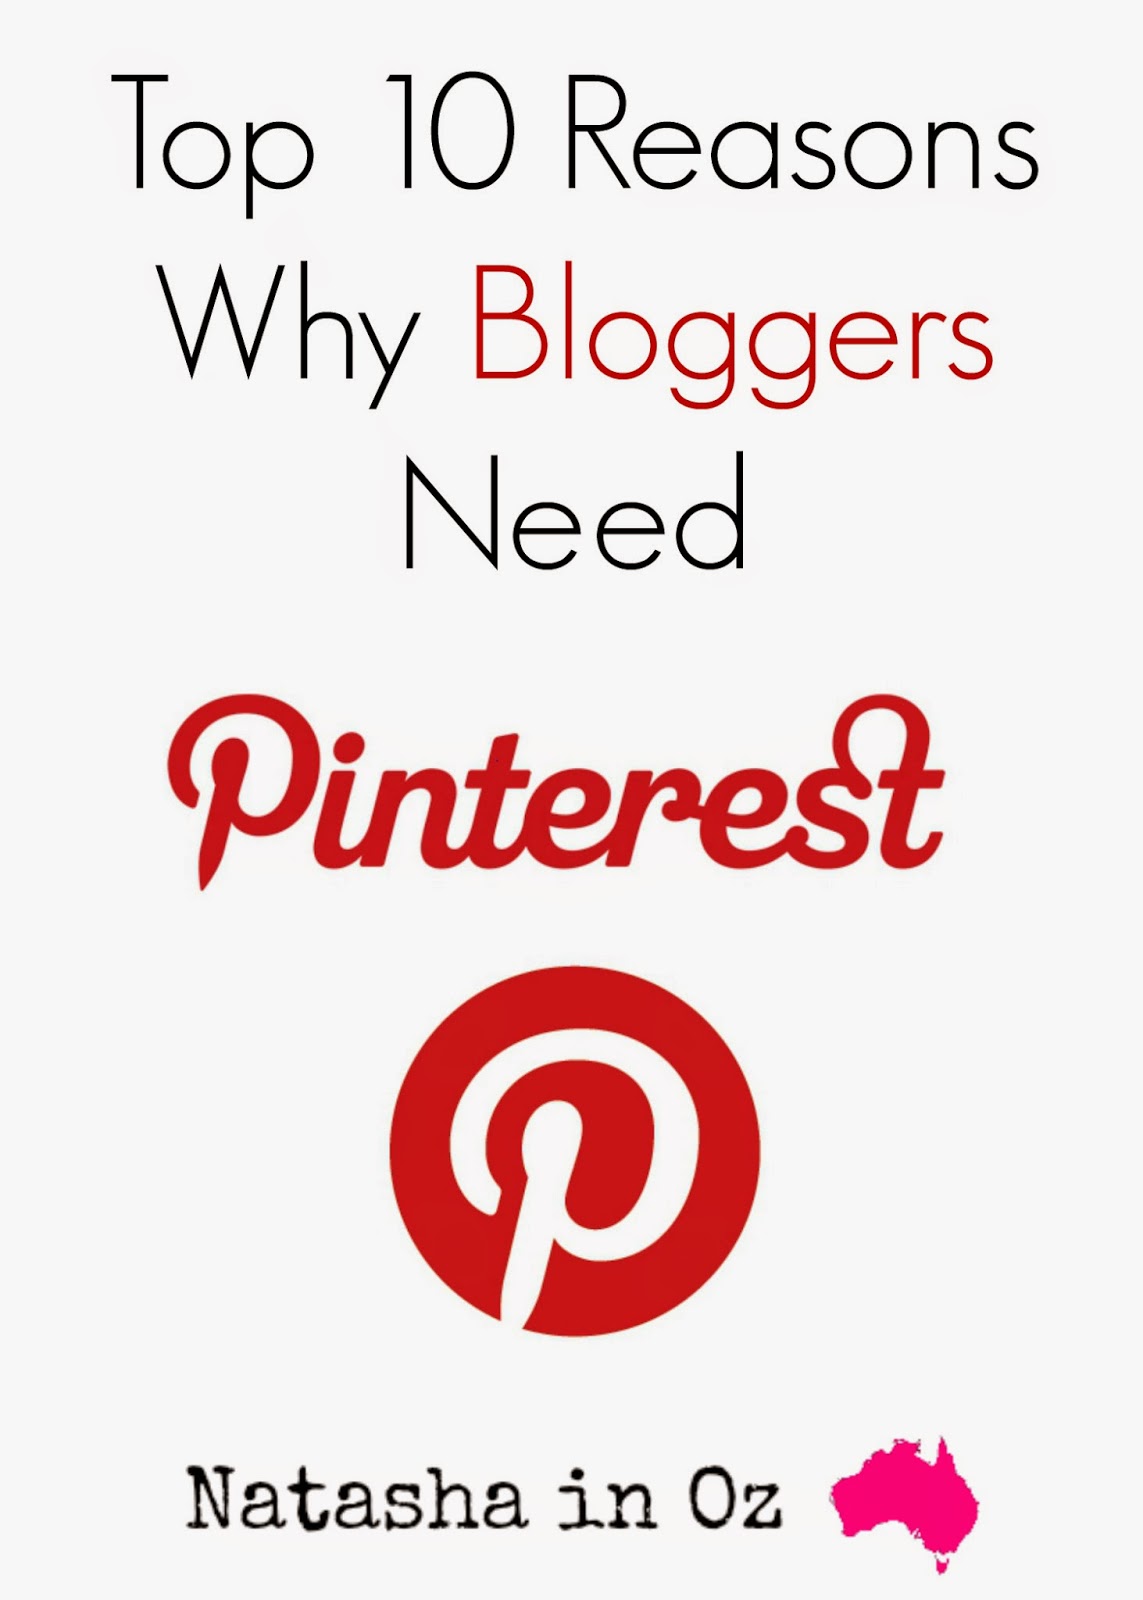 Top 10 Reasons Why Bloggers Need Pinterest via www.natashainoz.com